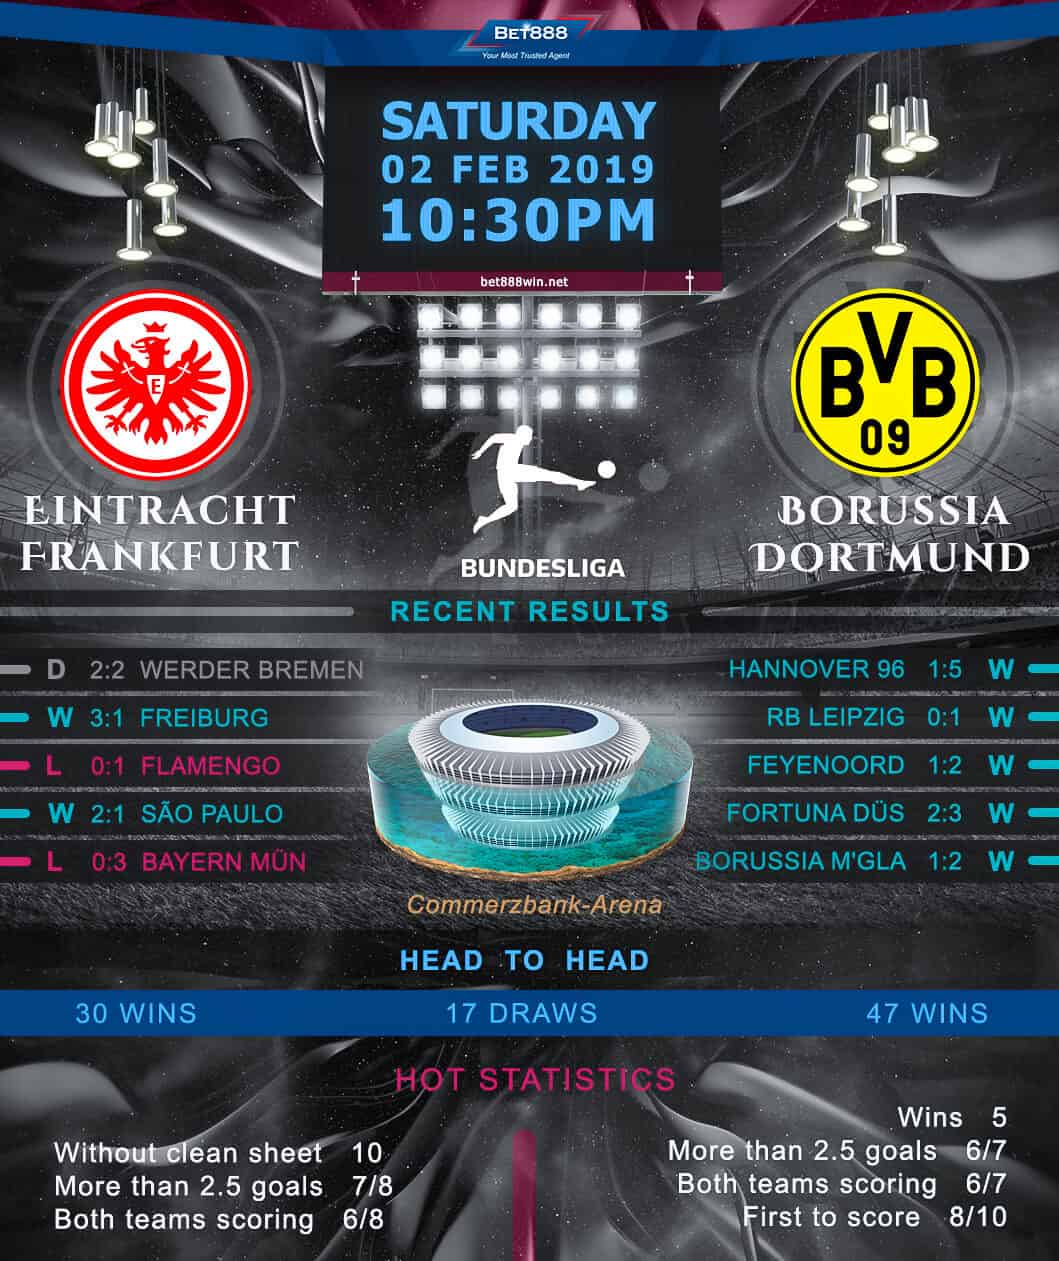 Eintracht Frankfurt vs Borussia Dortmund 02/02/19